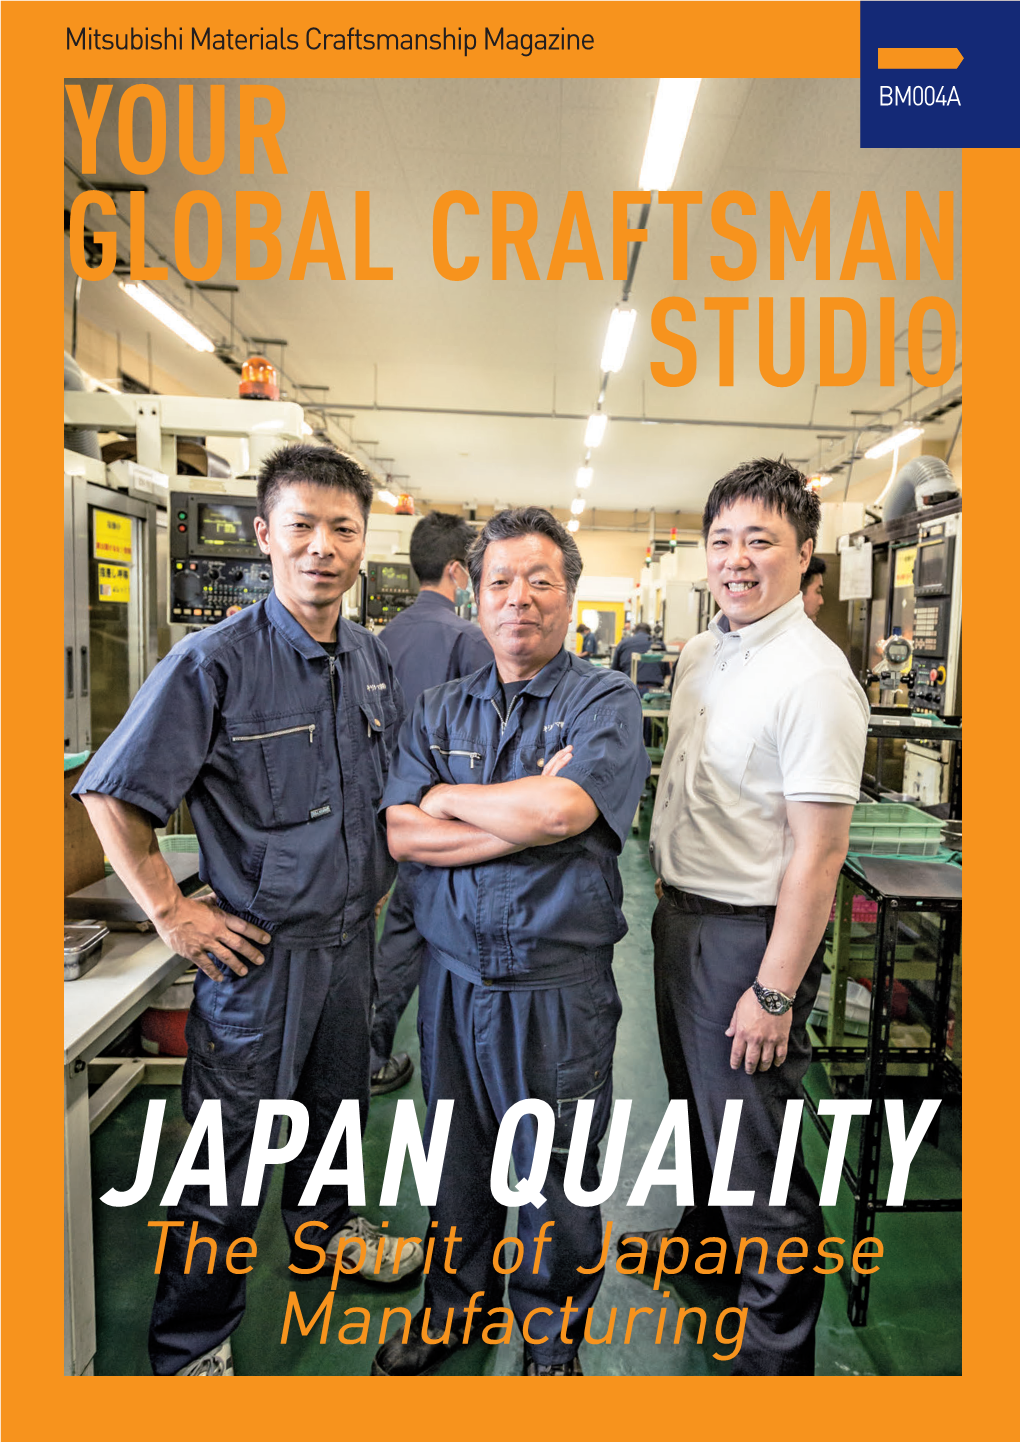 The Spirit of Japanese Manufacturing VOL.4 STORIESVOL.4 Vol.4 Stories Your Global Craftsman Studio